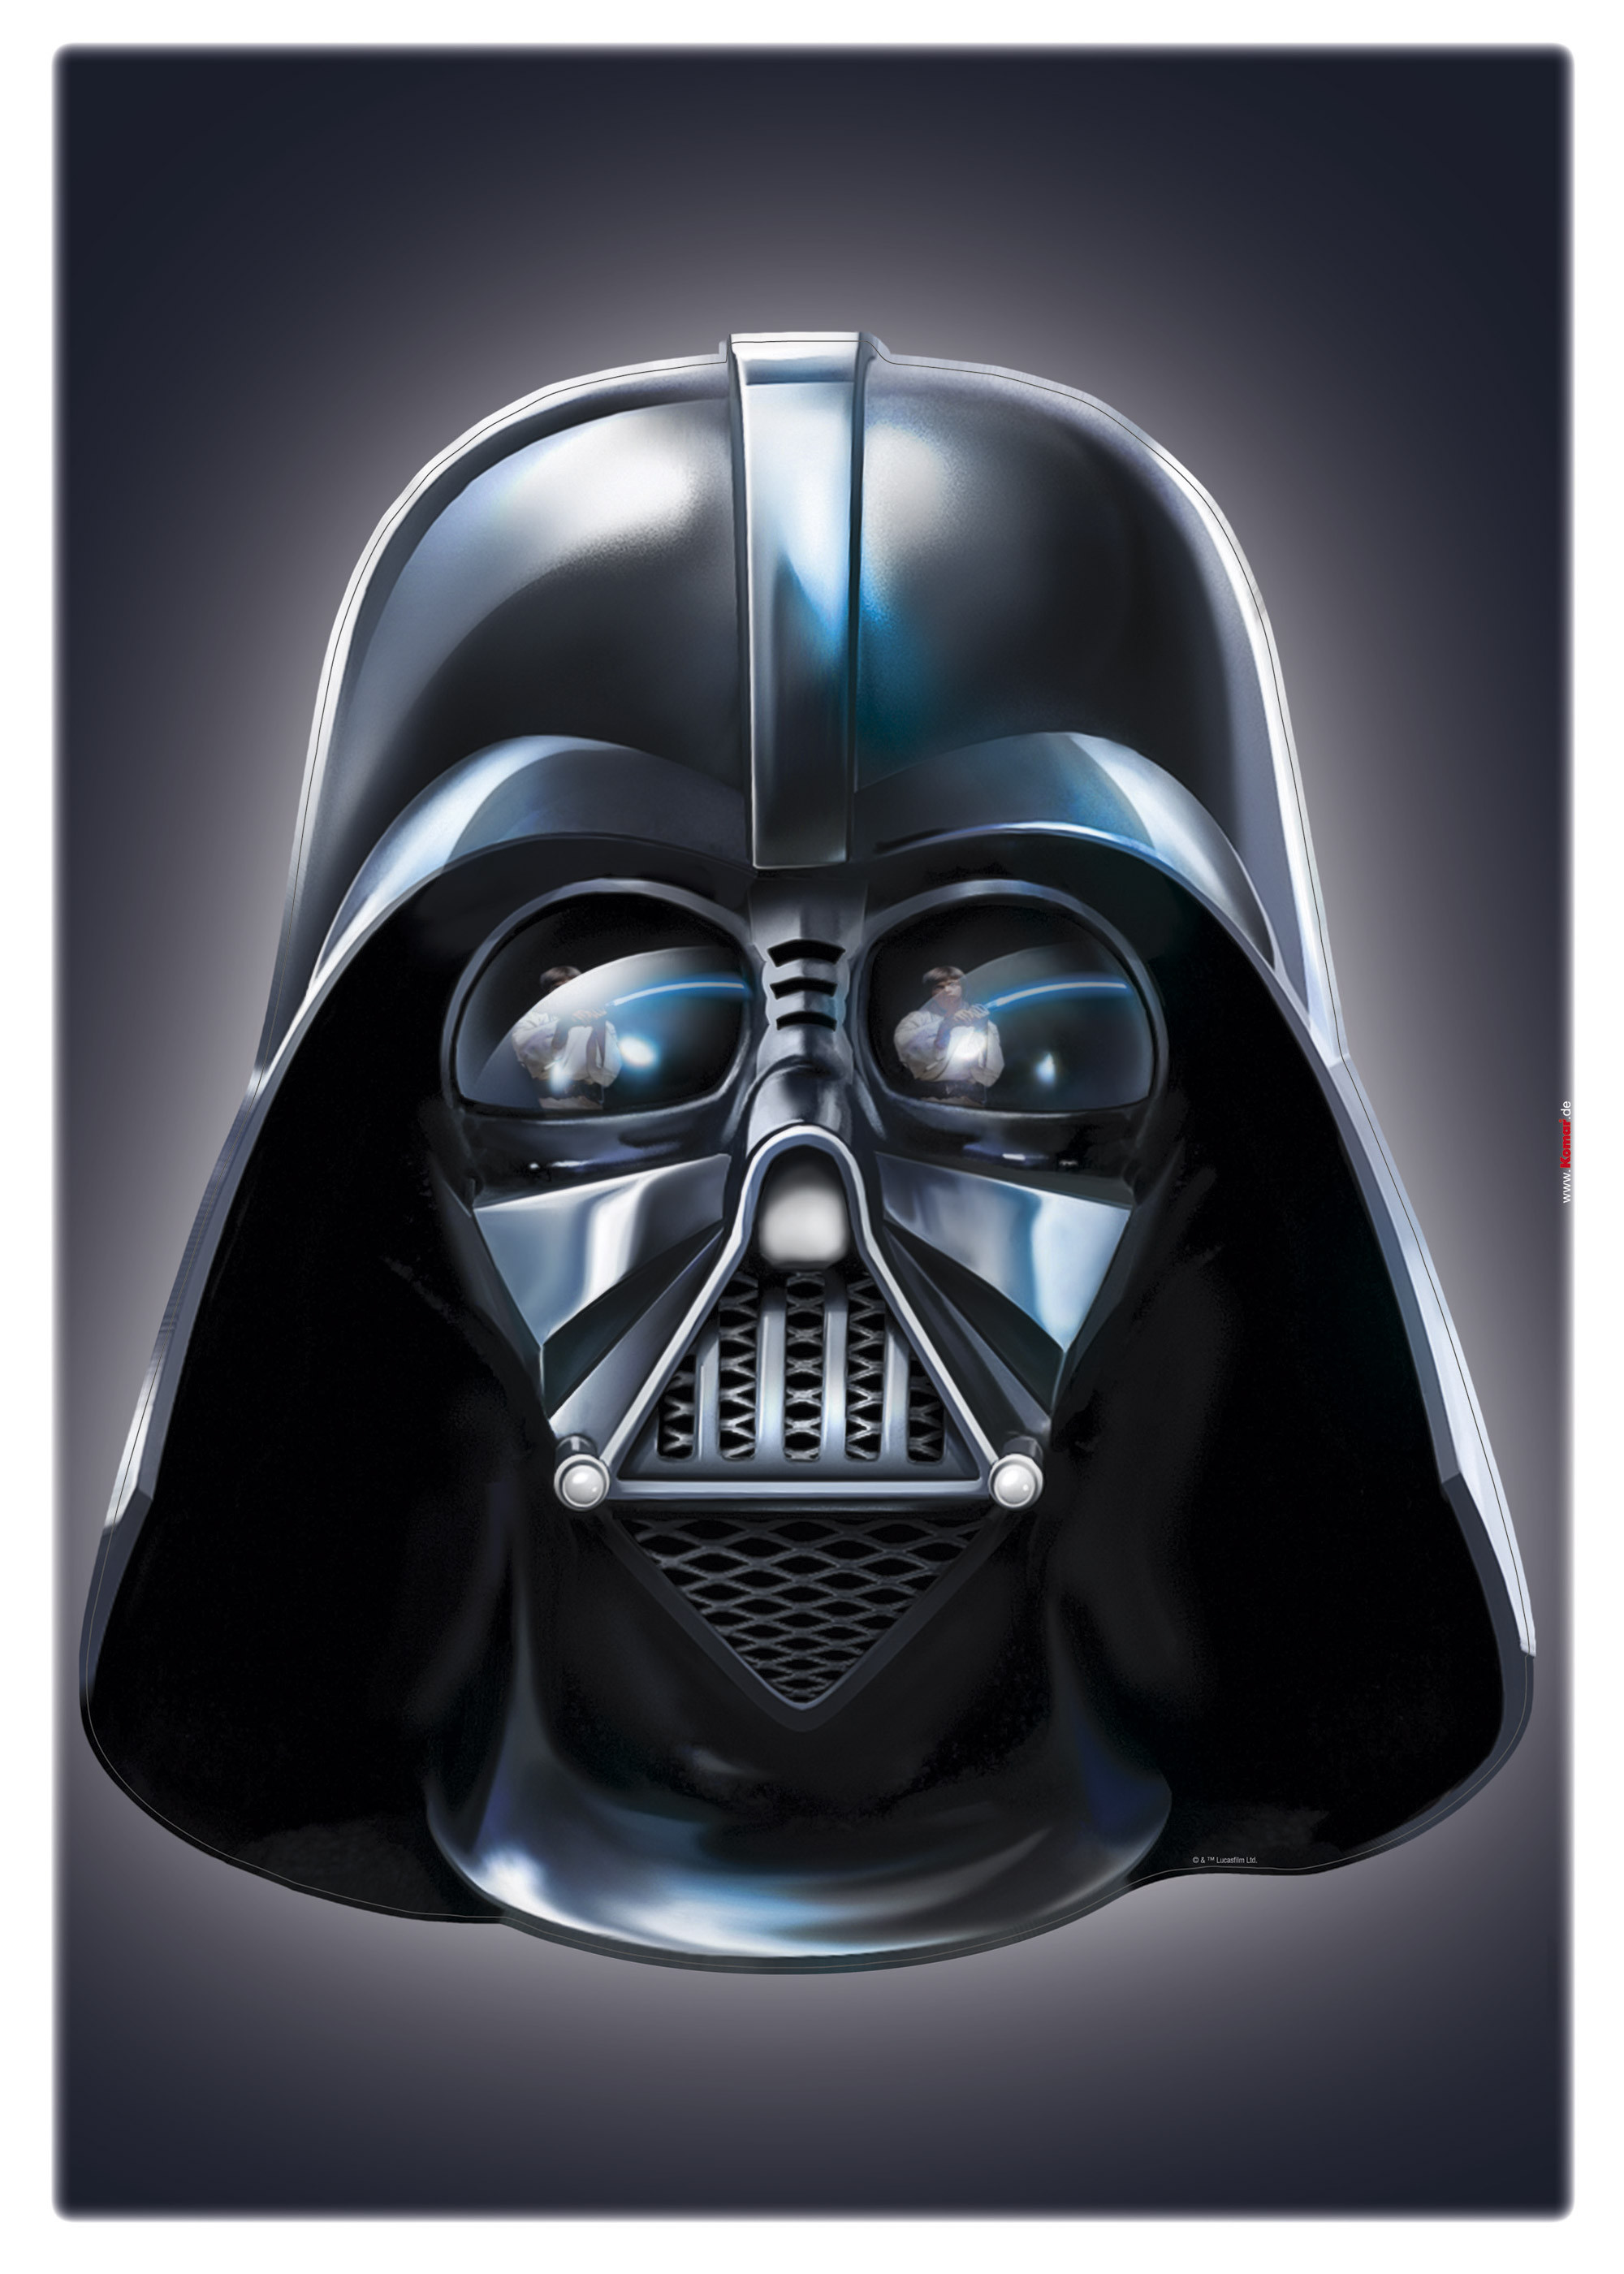 Sticker mural décoratif Star Wars Darth Vader